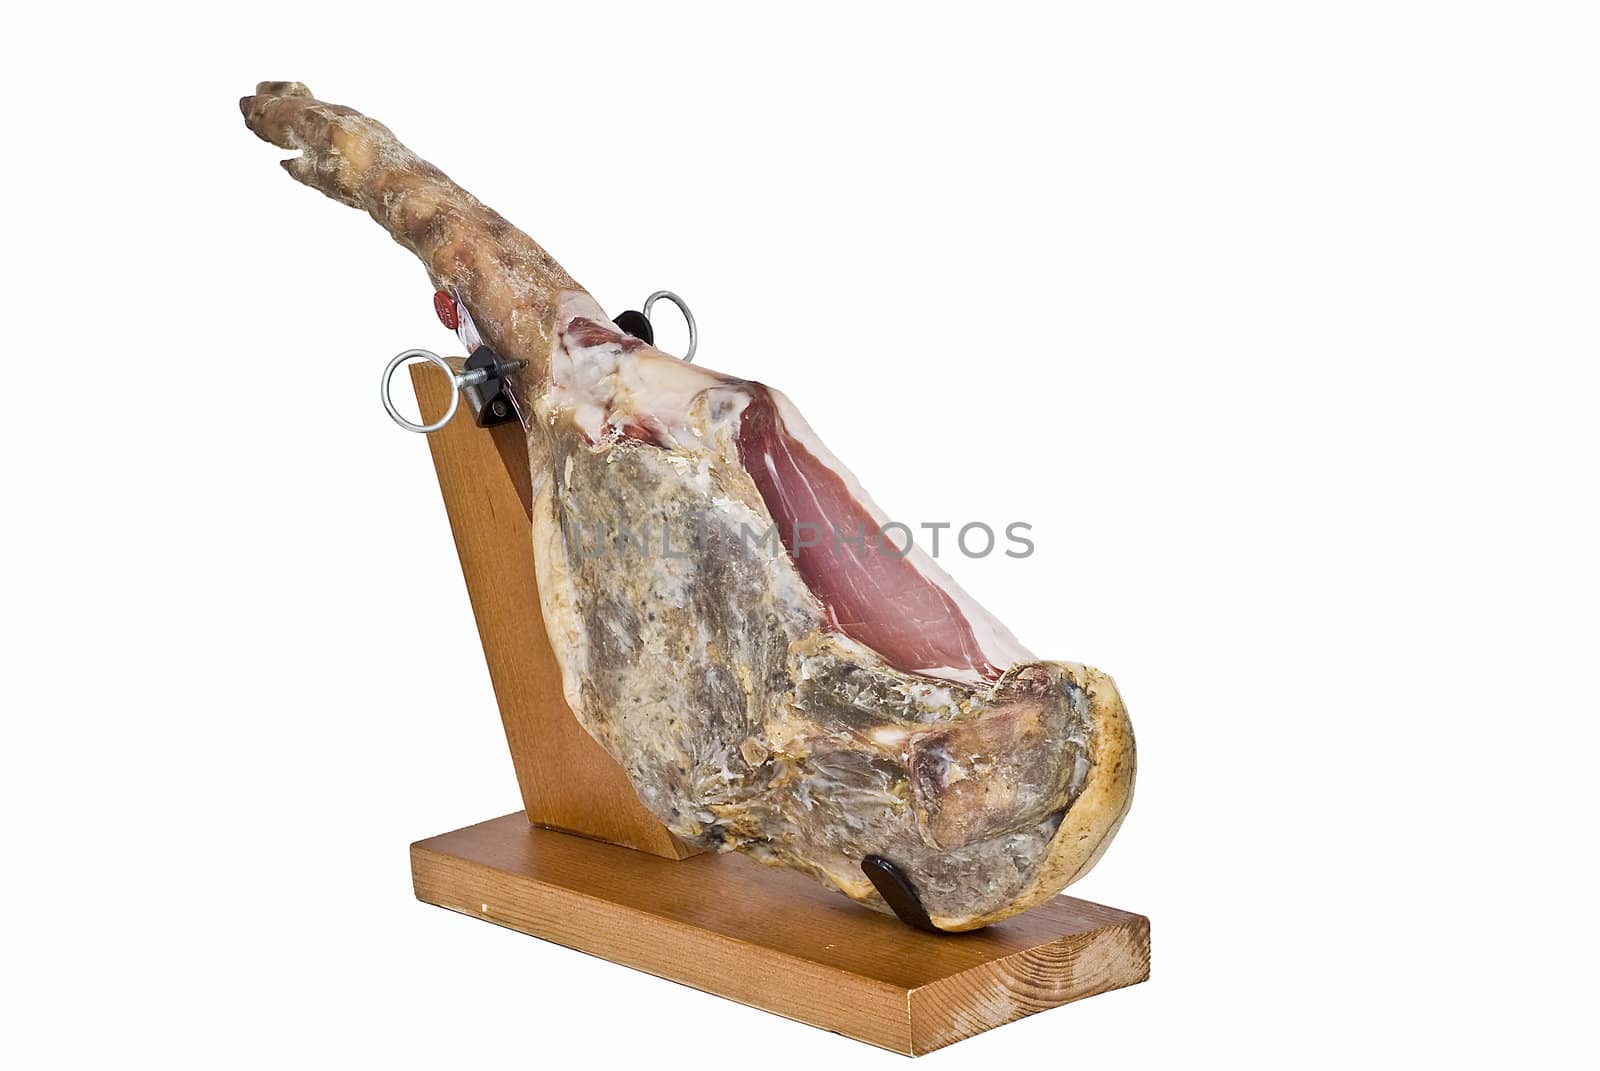 Spanish ham on its stand.